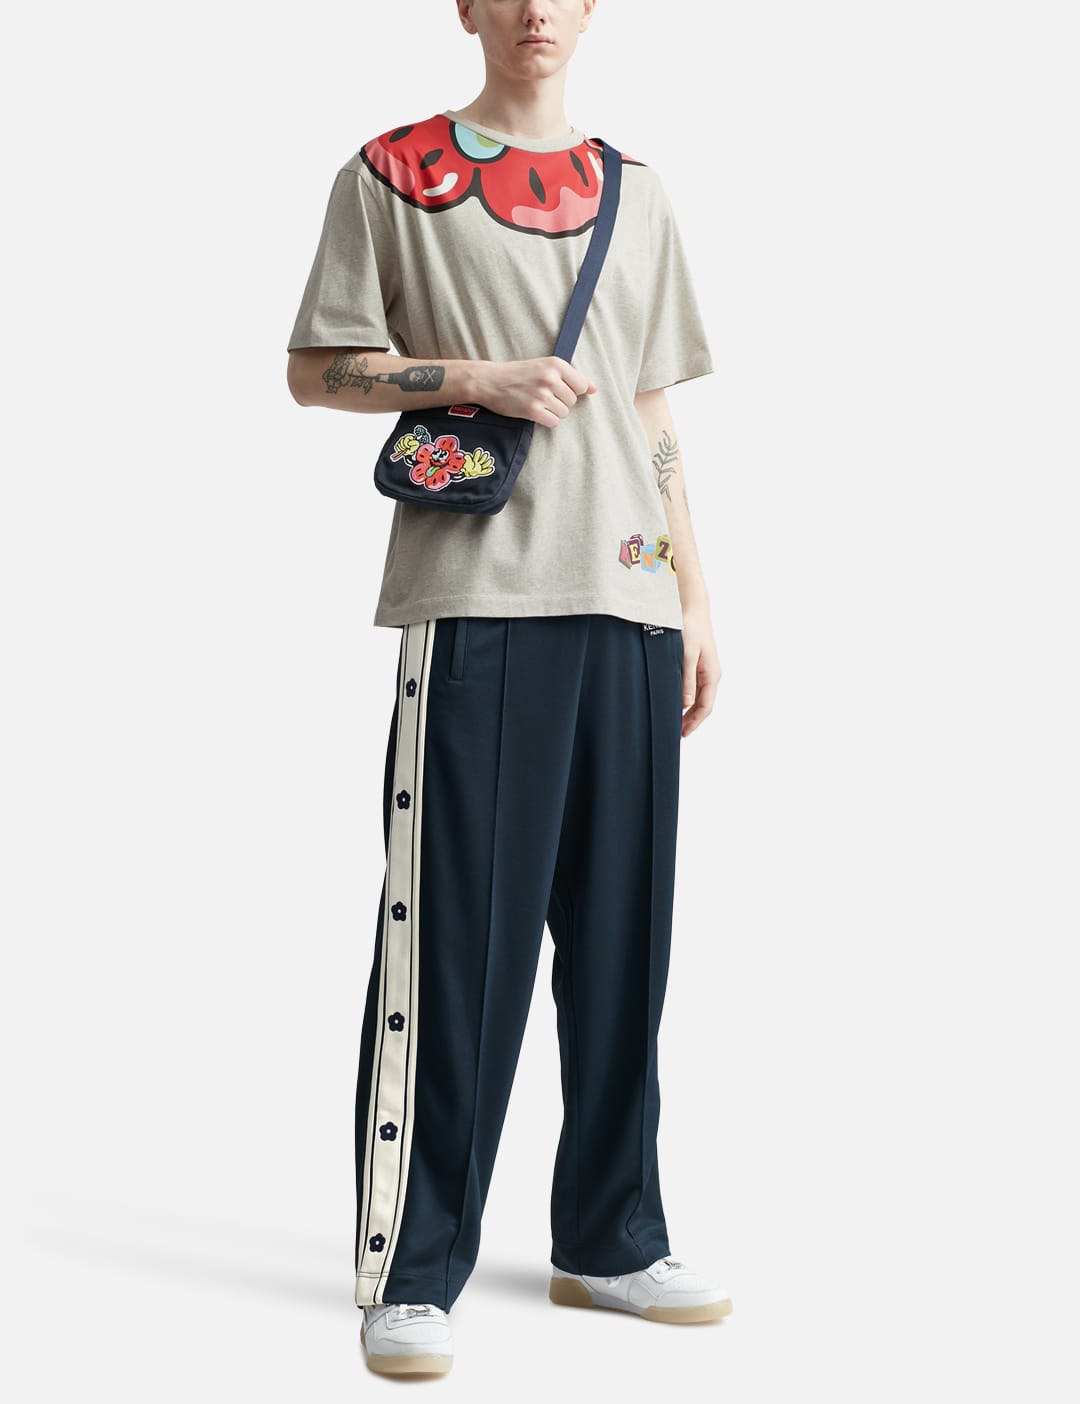 Kenzo - 'Boke Boy' Small Bag | HBX - Globally Curated Fashion and